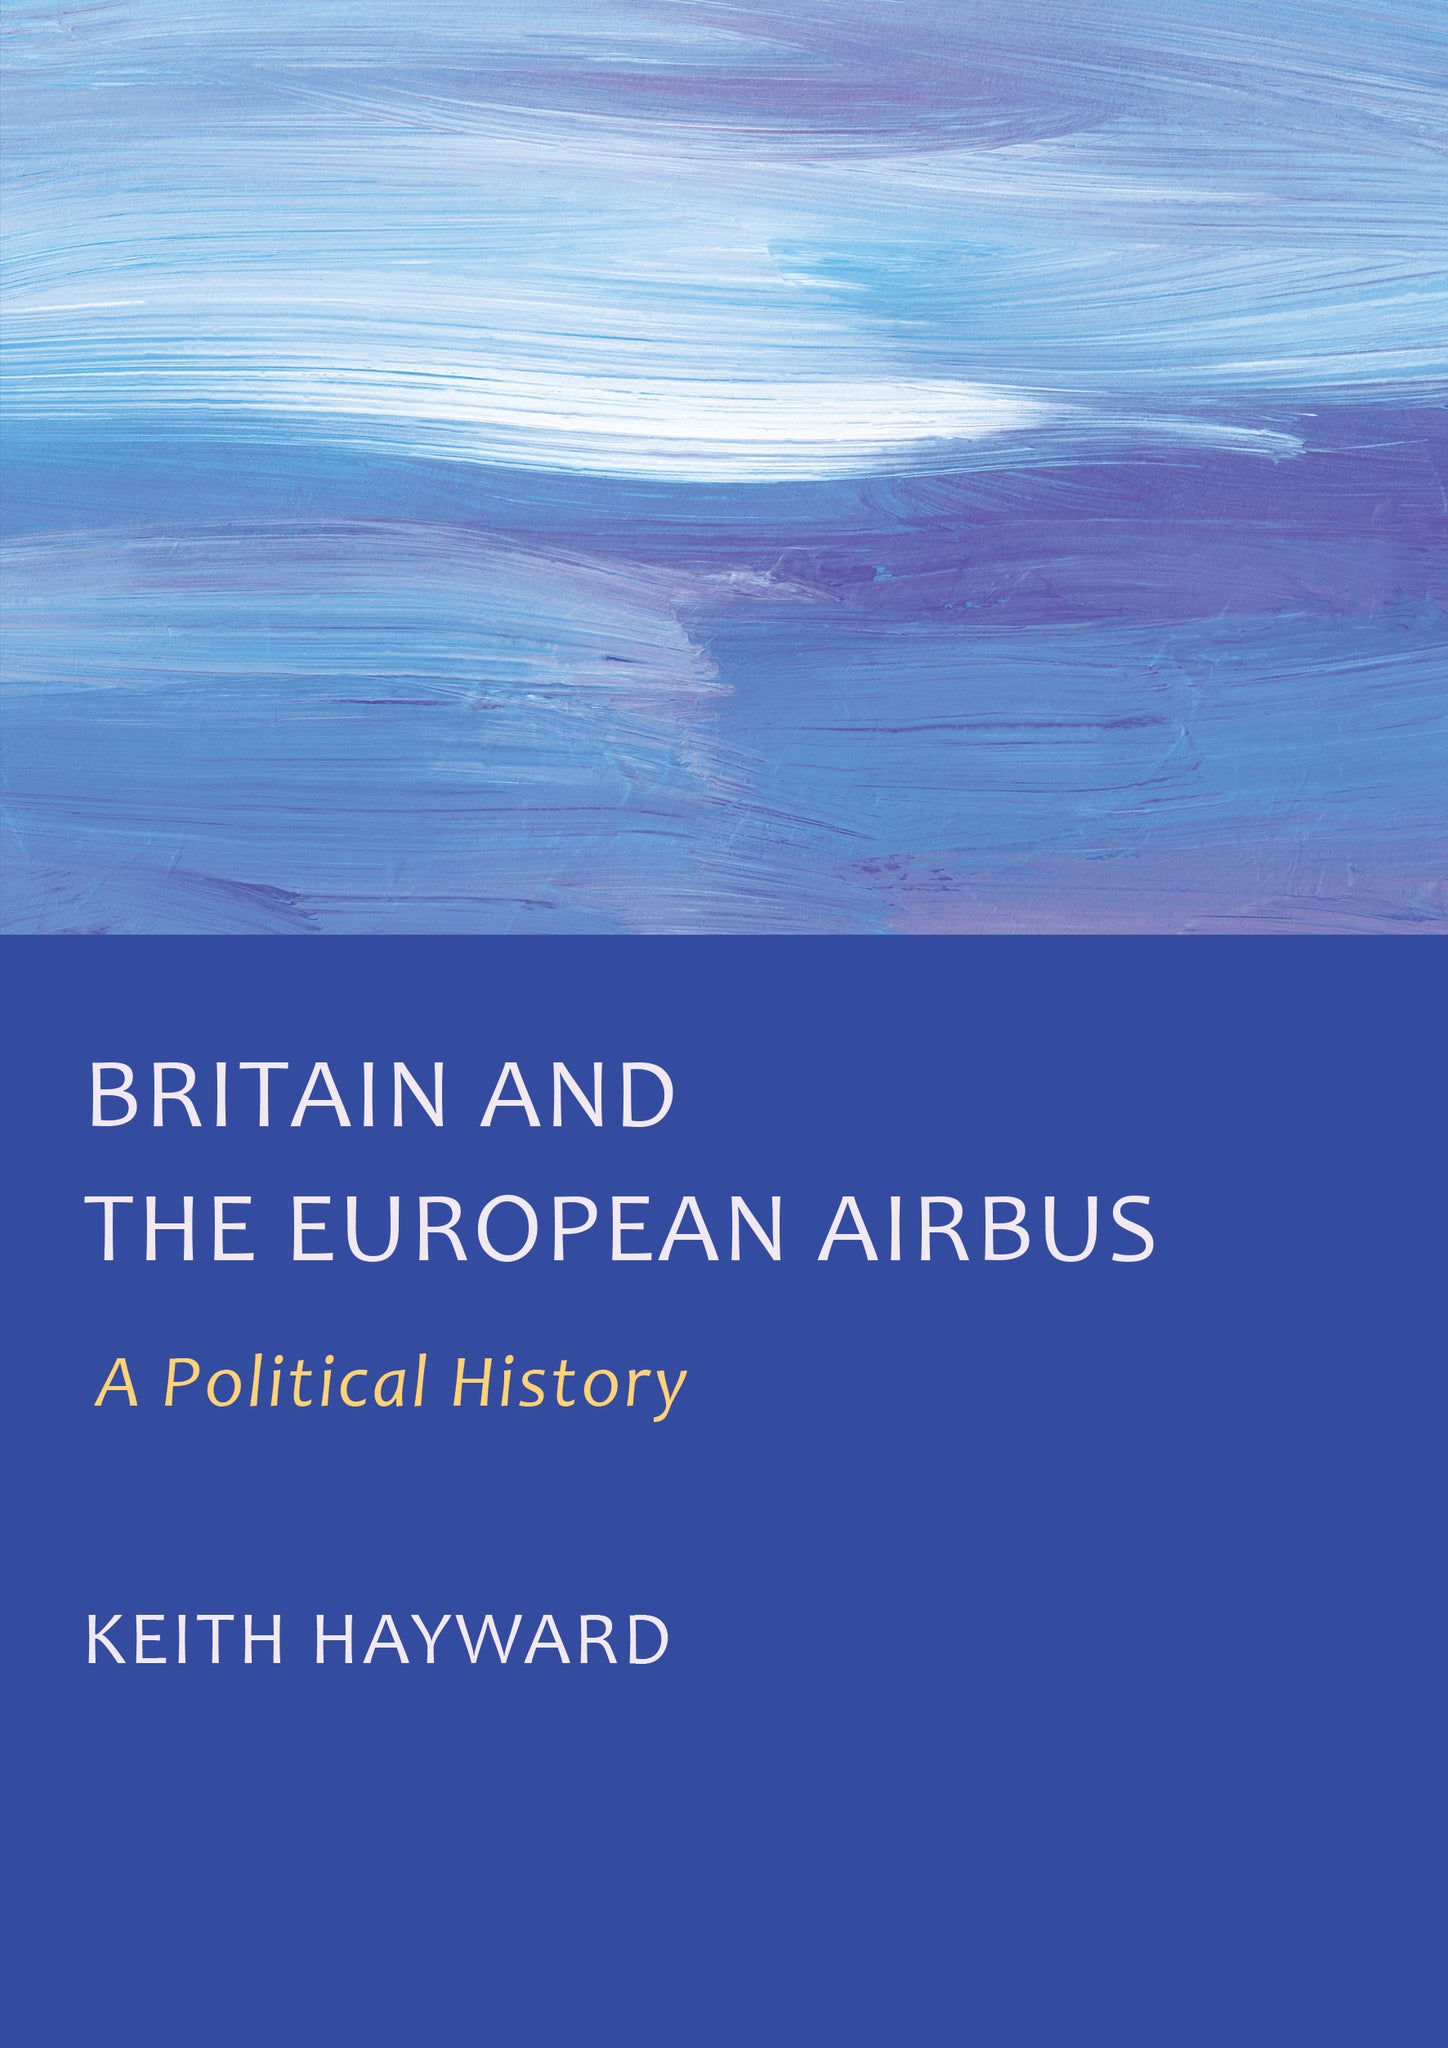 Britain and the European Airbus: A Political History